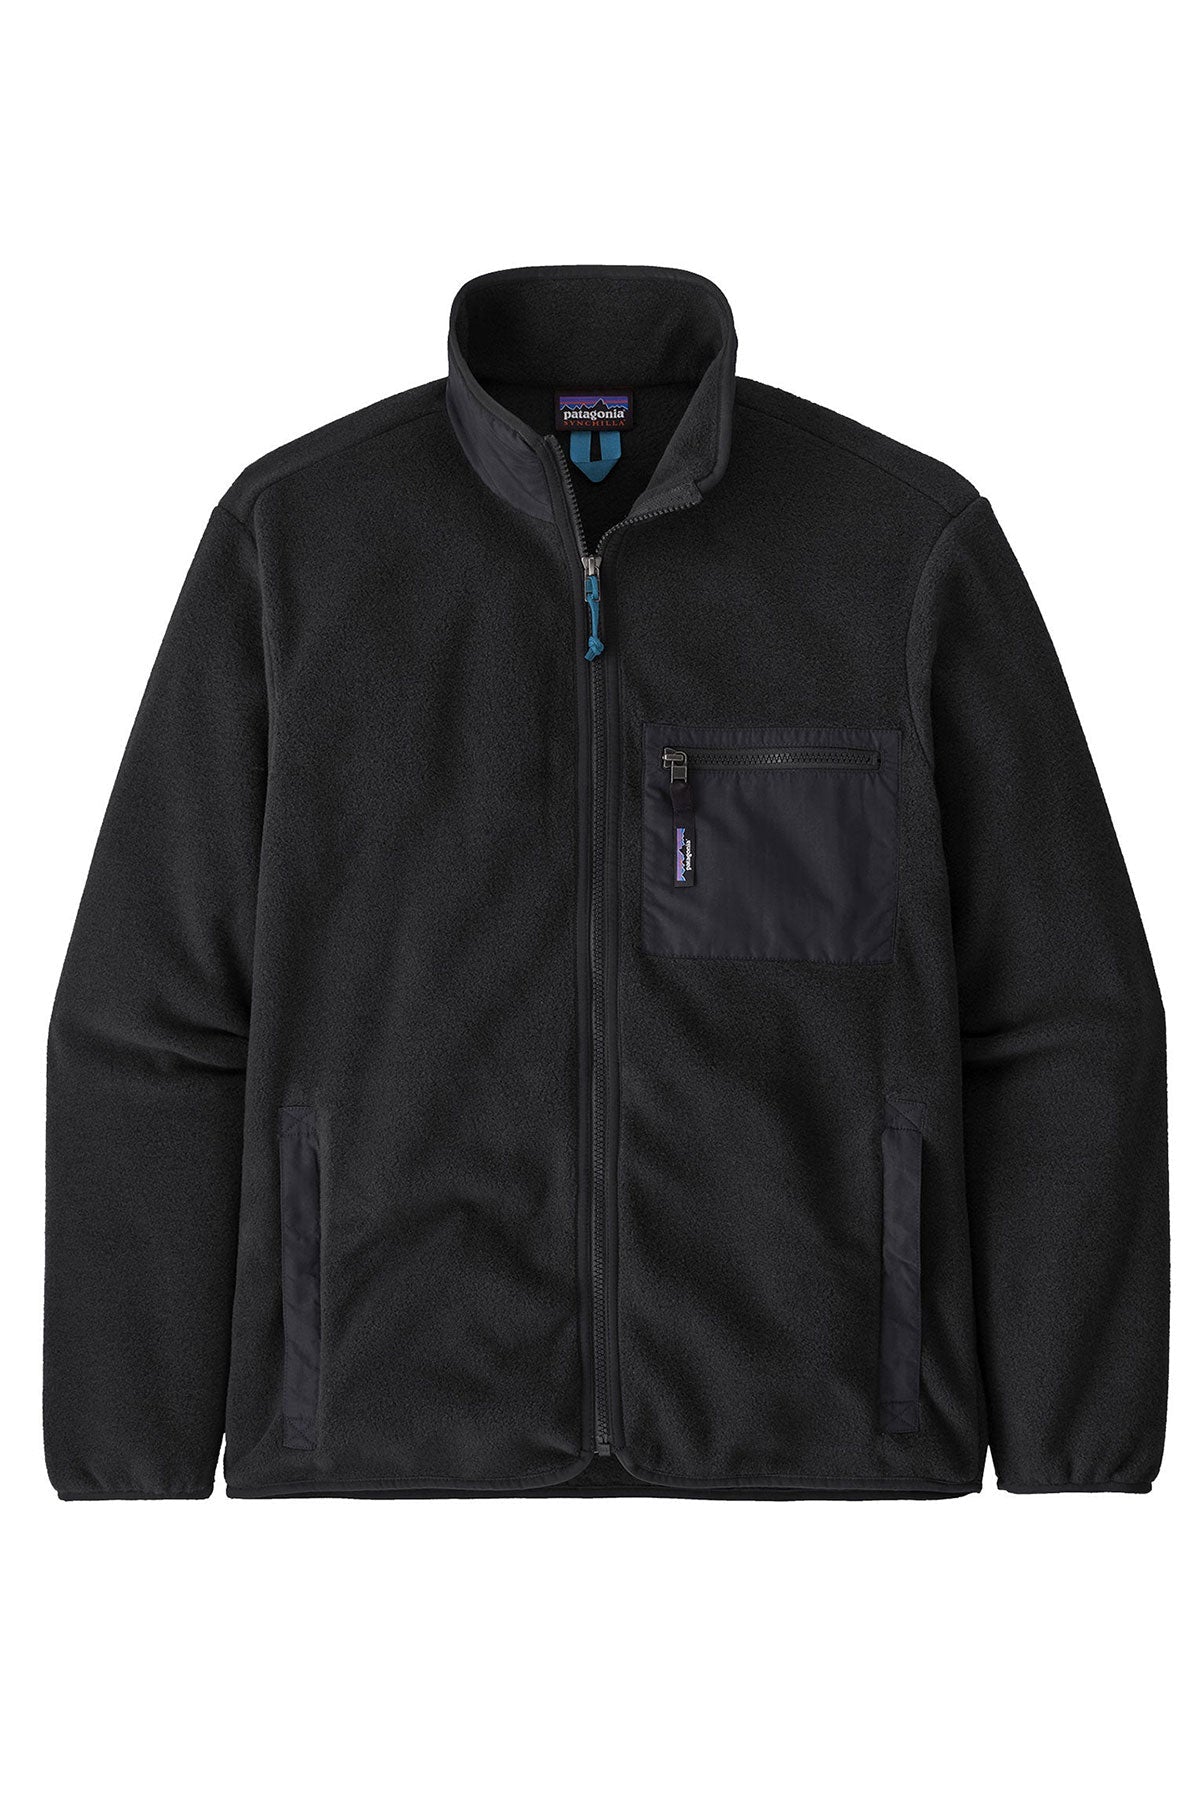 Patagonia Mens Classic Synchilla Custom Fleece Jackets, Black